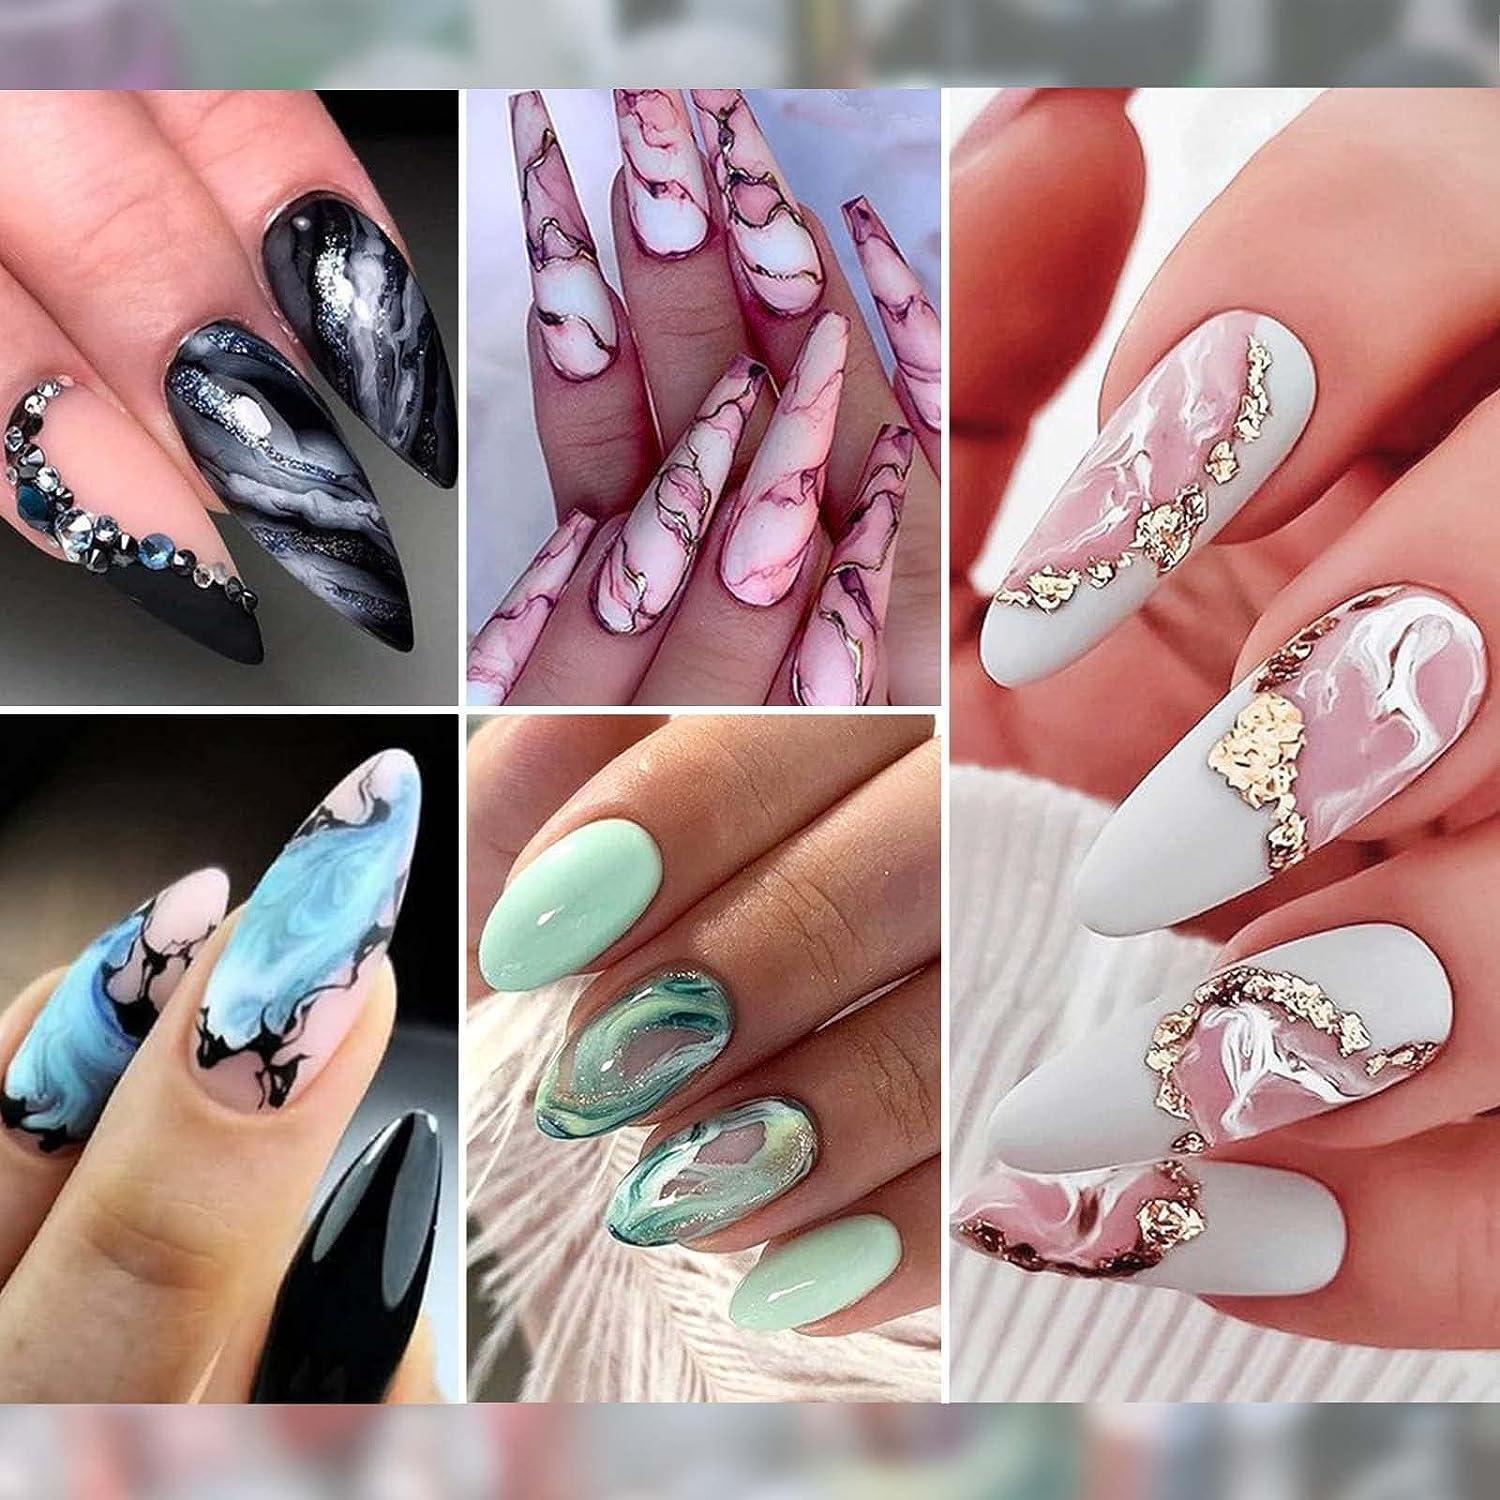 5 insanely pretty nude nail art ideas to copy RN